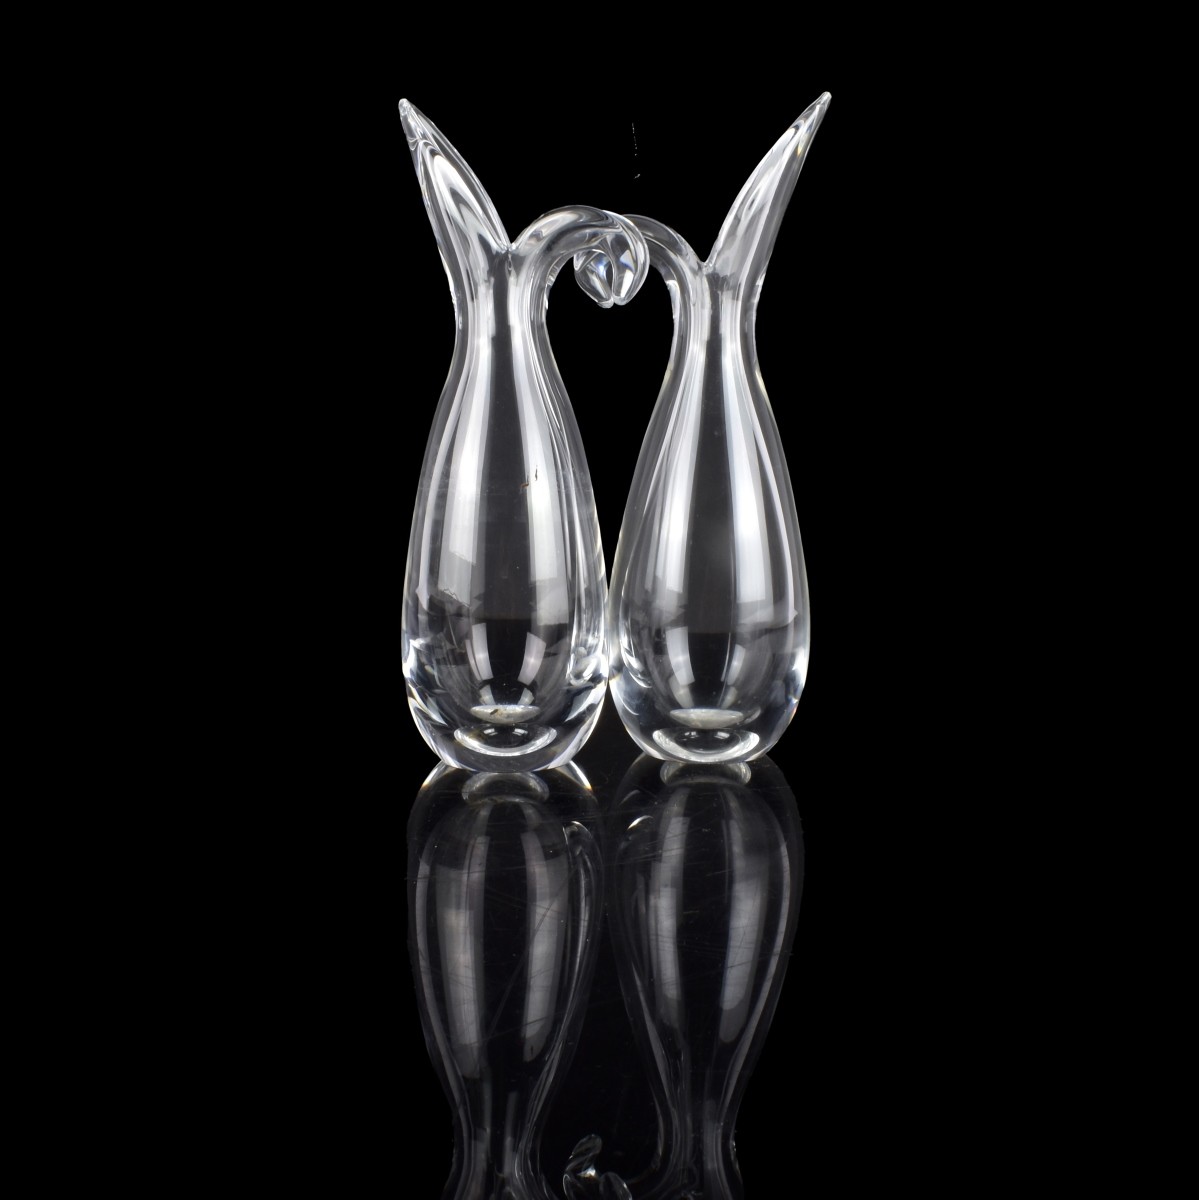 Pair of Steuben Vases